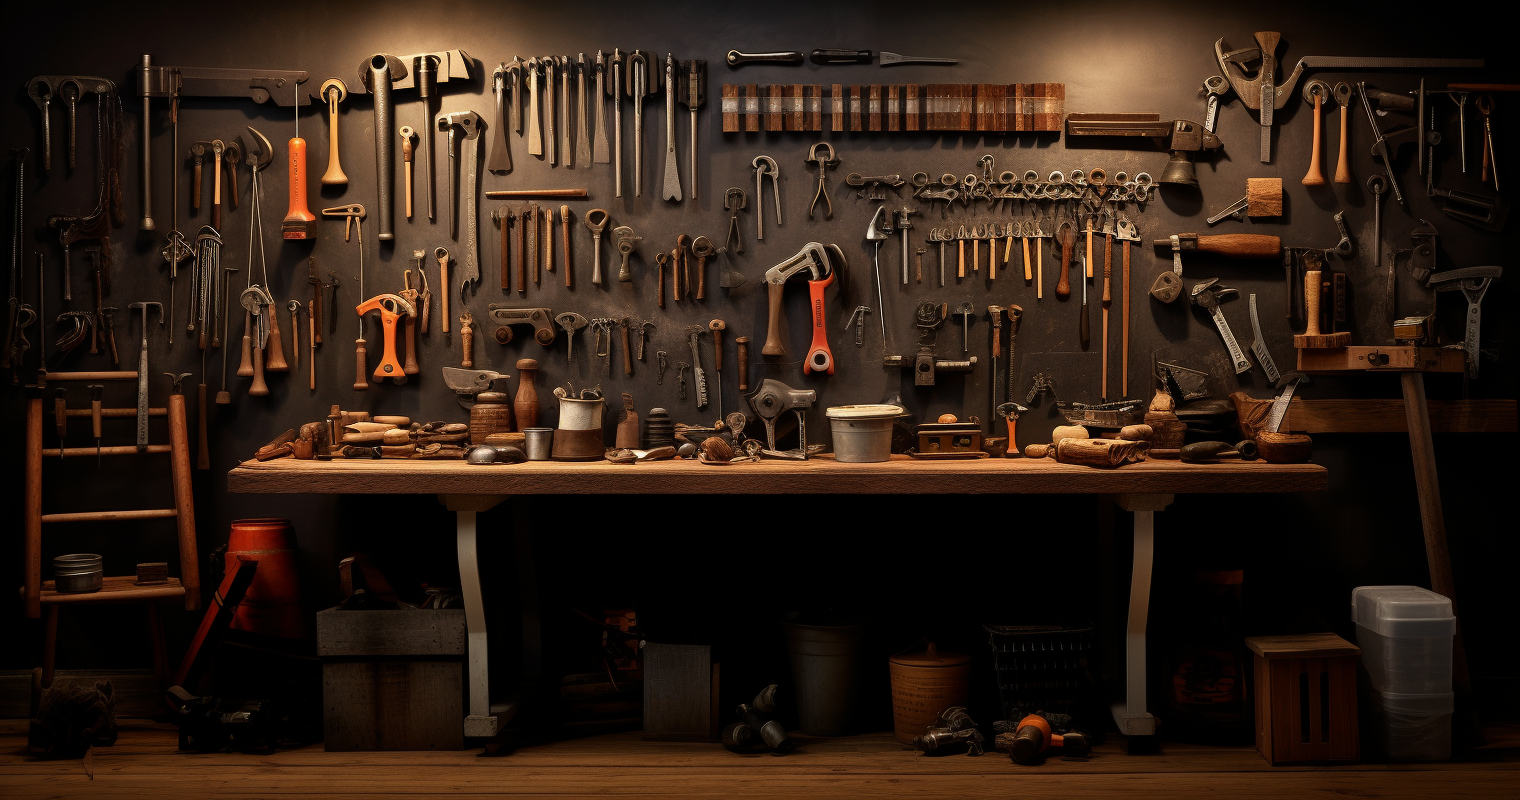 Evolution of Craftsman Tools